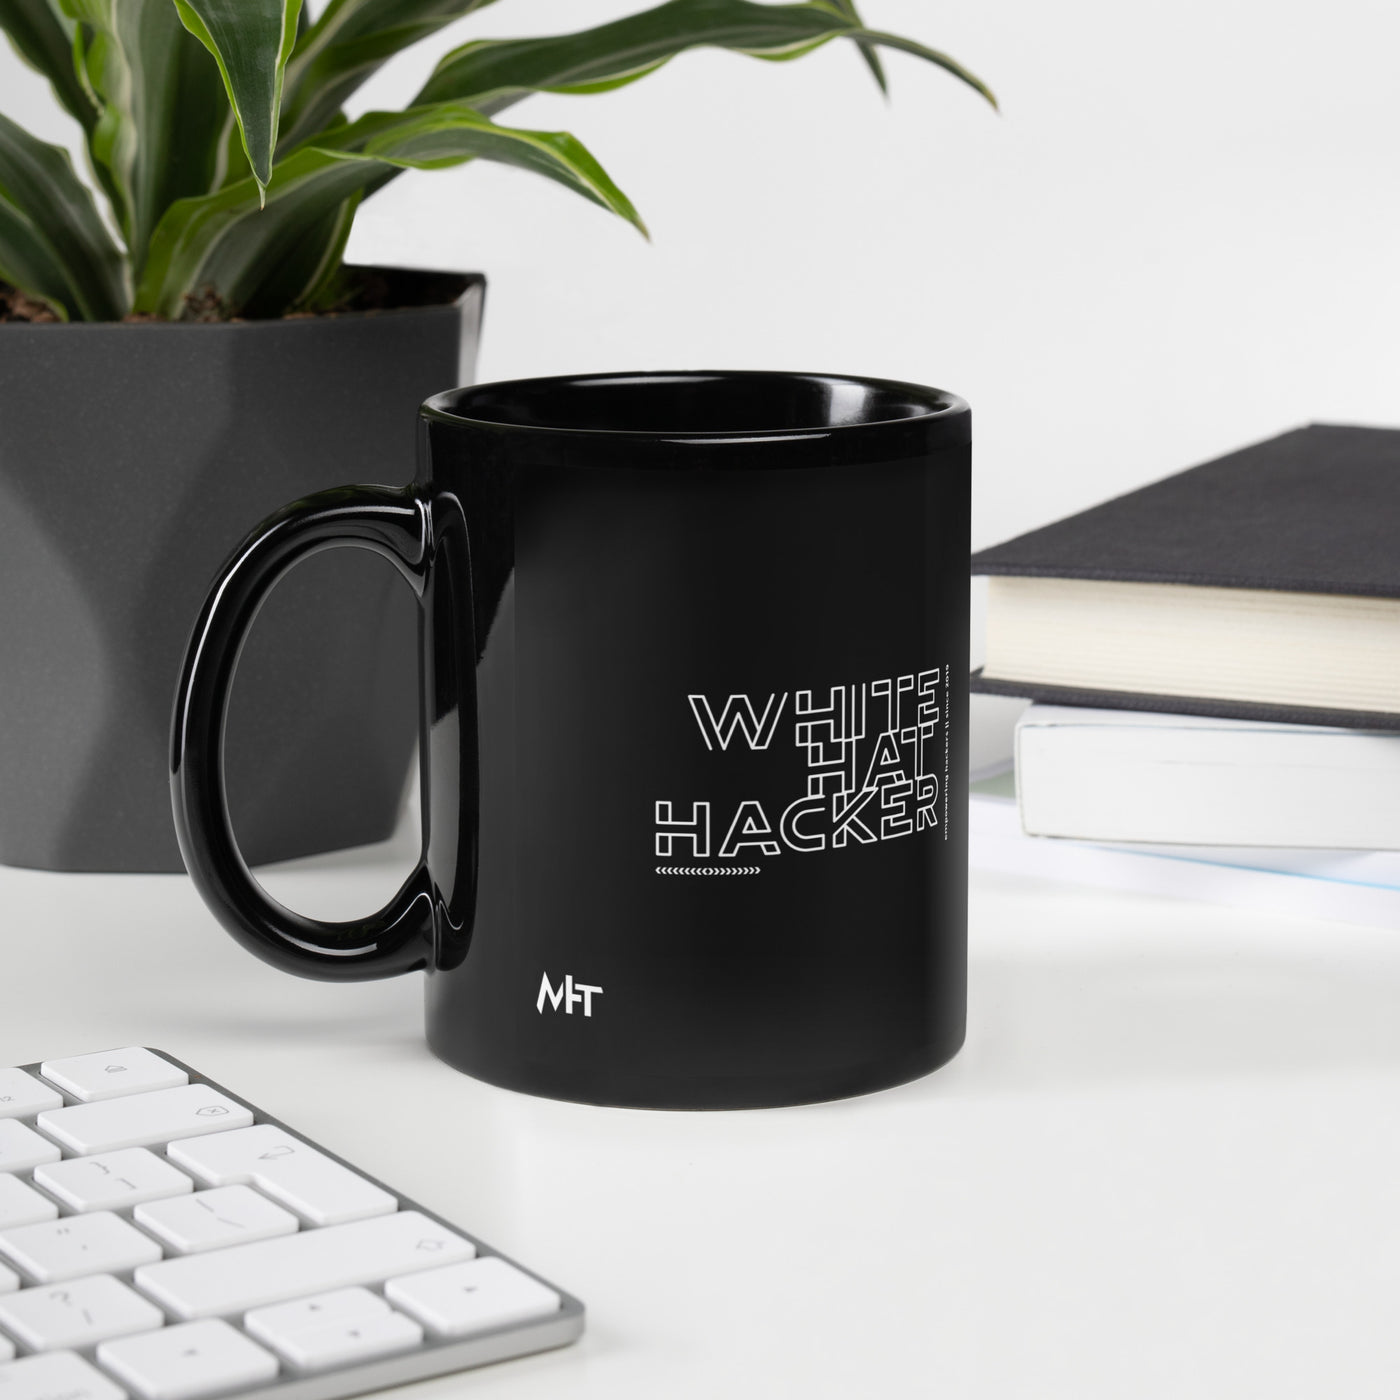 White Hat Hacker - Black Glossy Mug